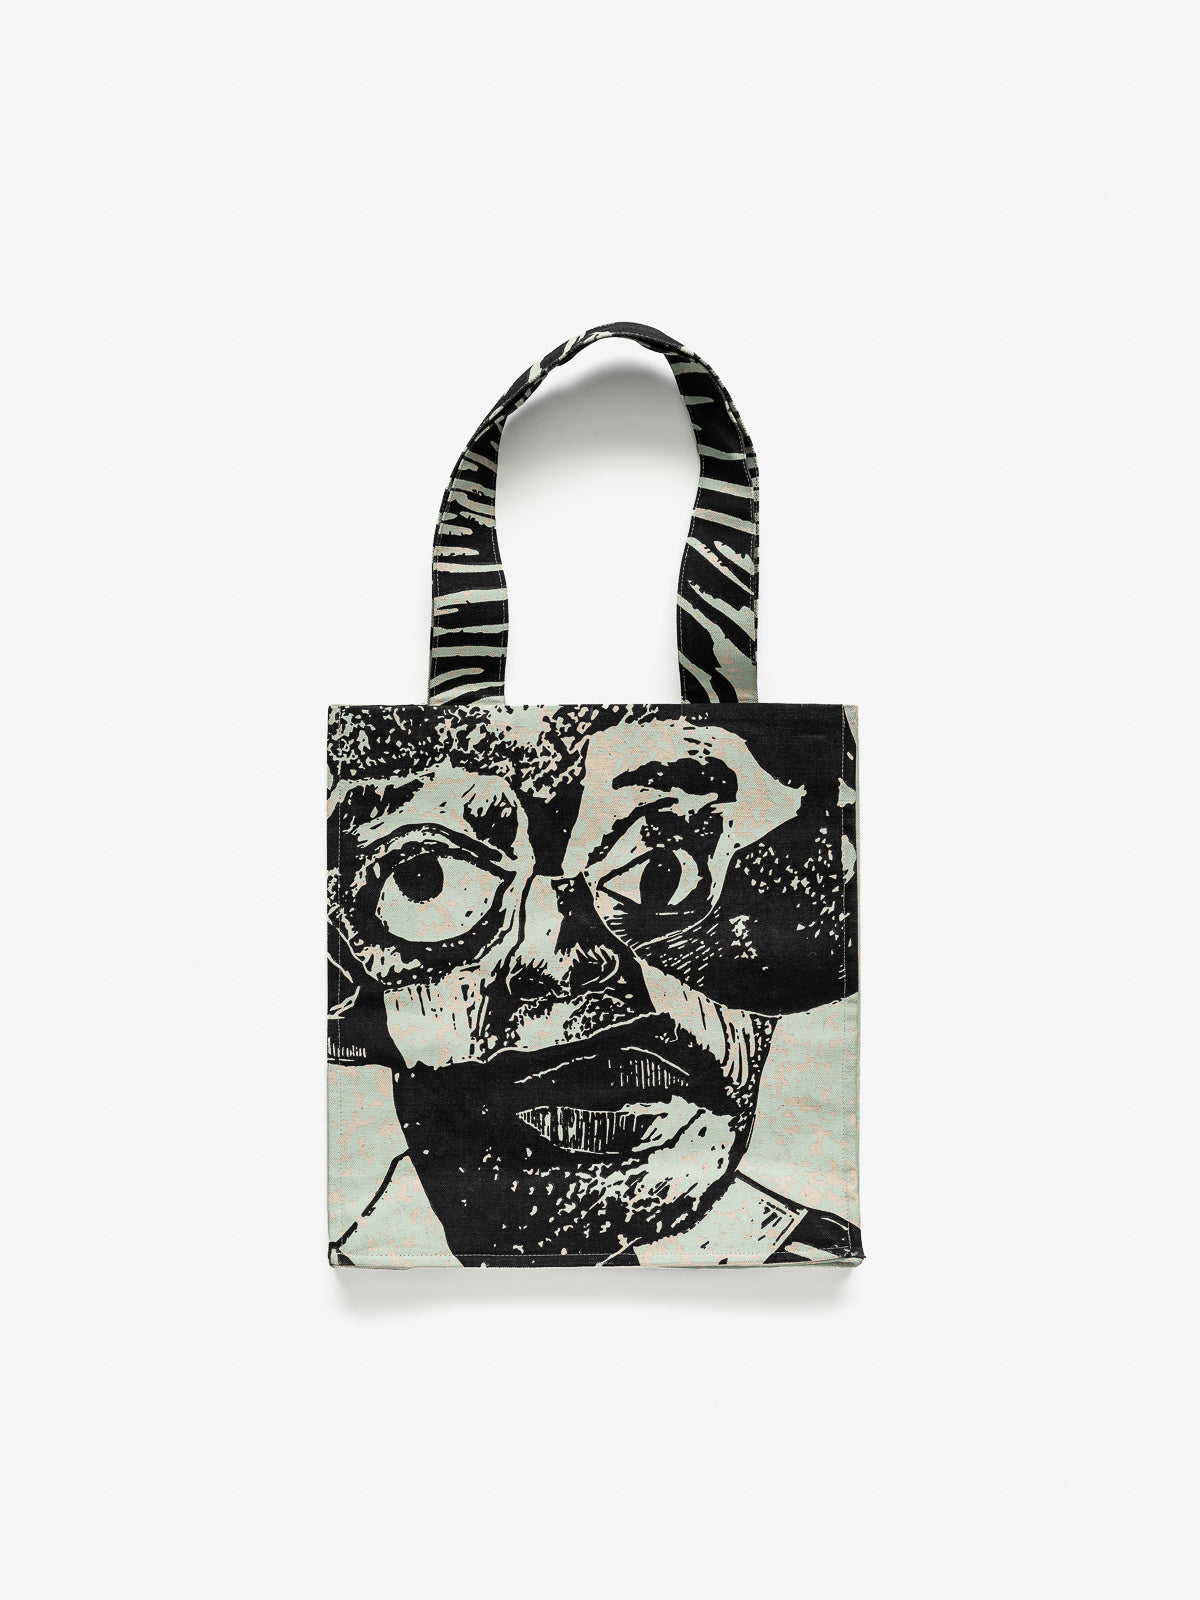 Artist Bag (Neo Image Matloga)